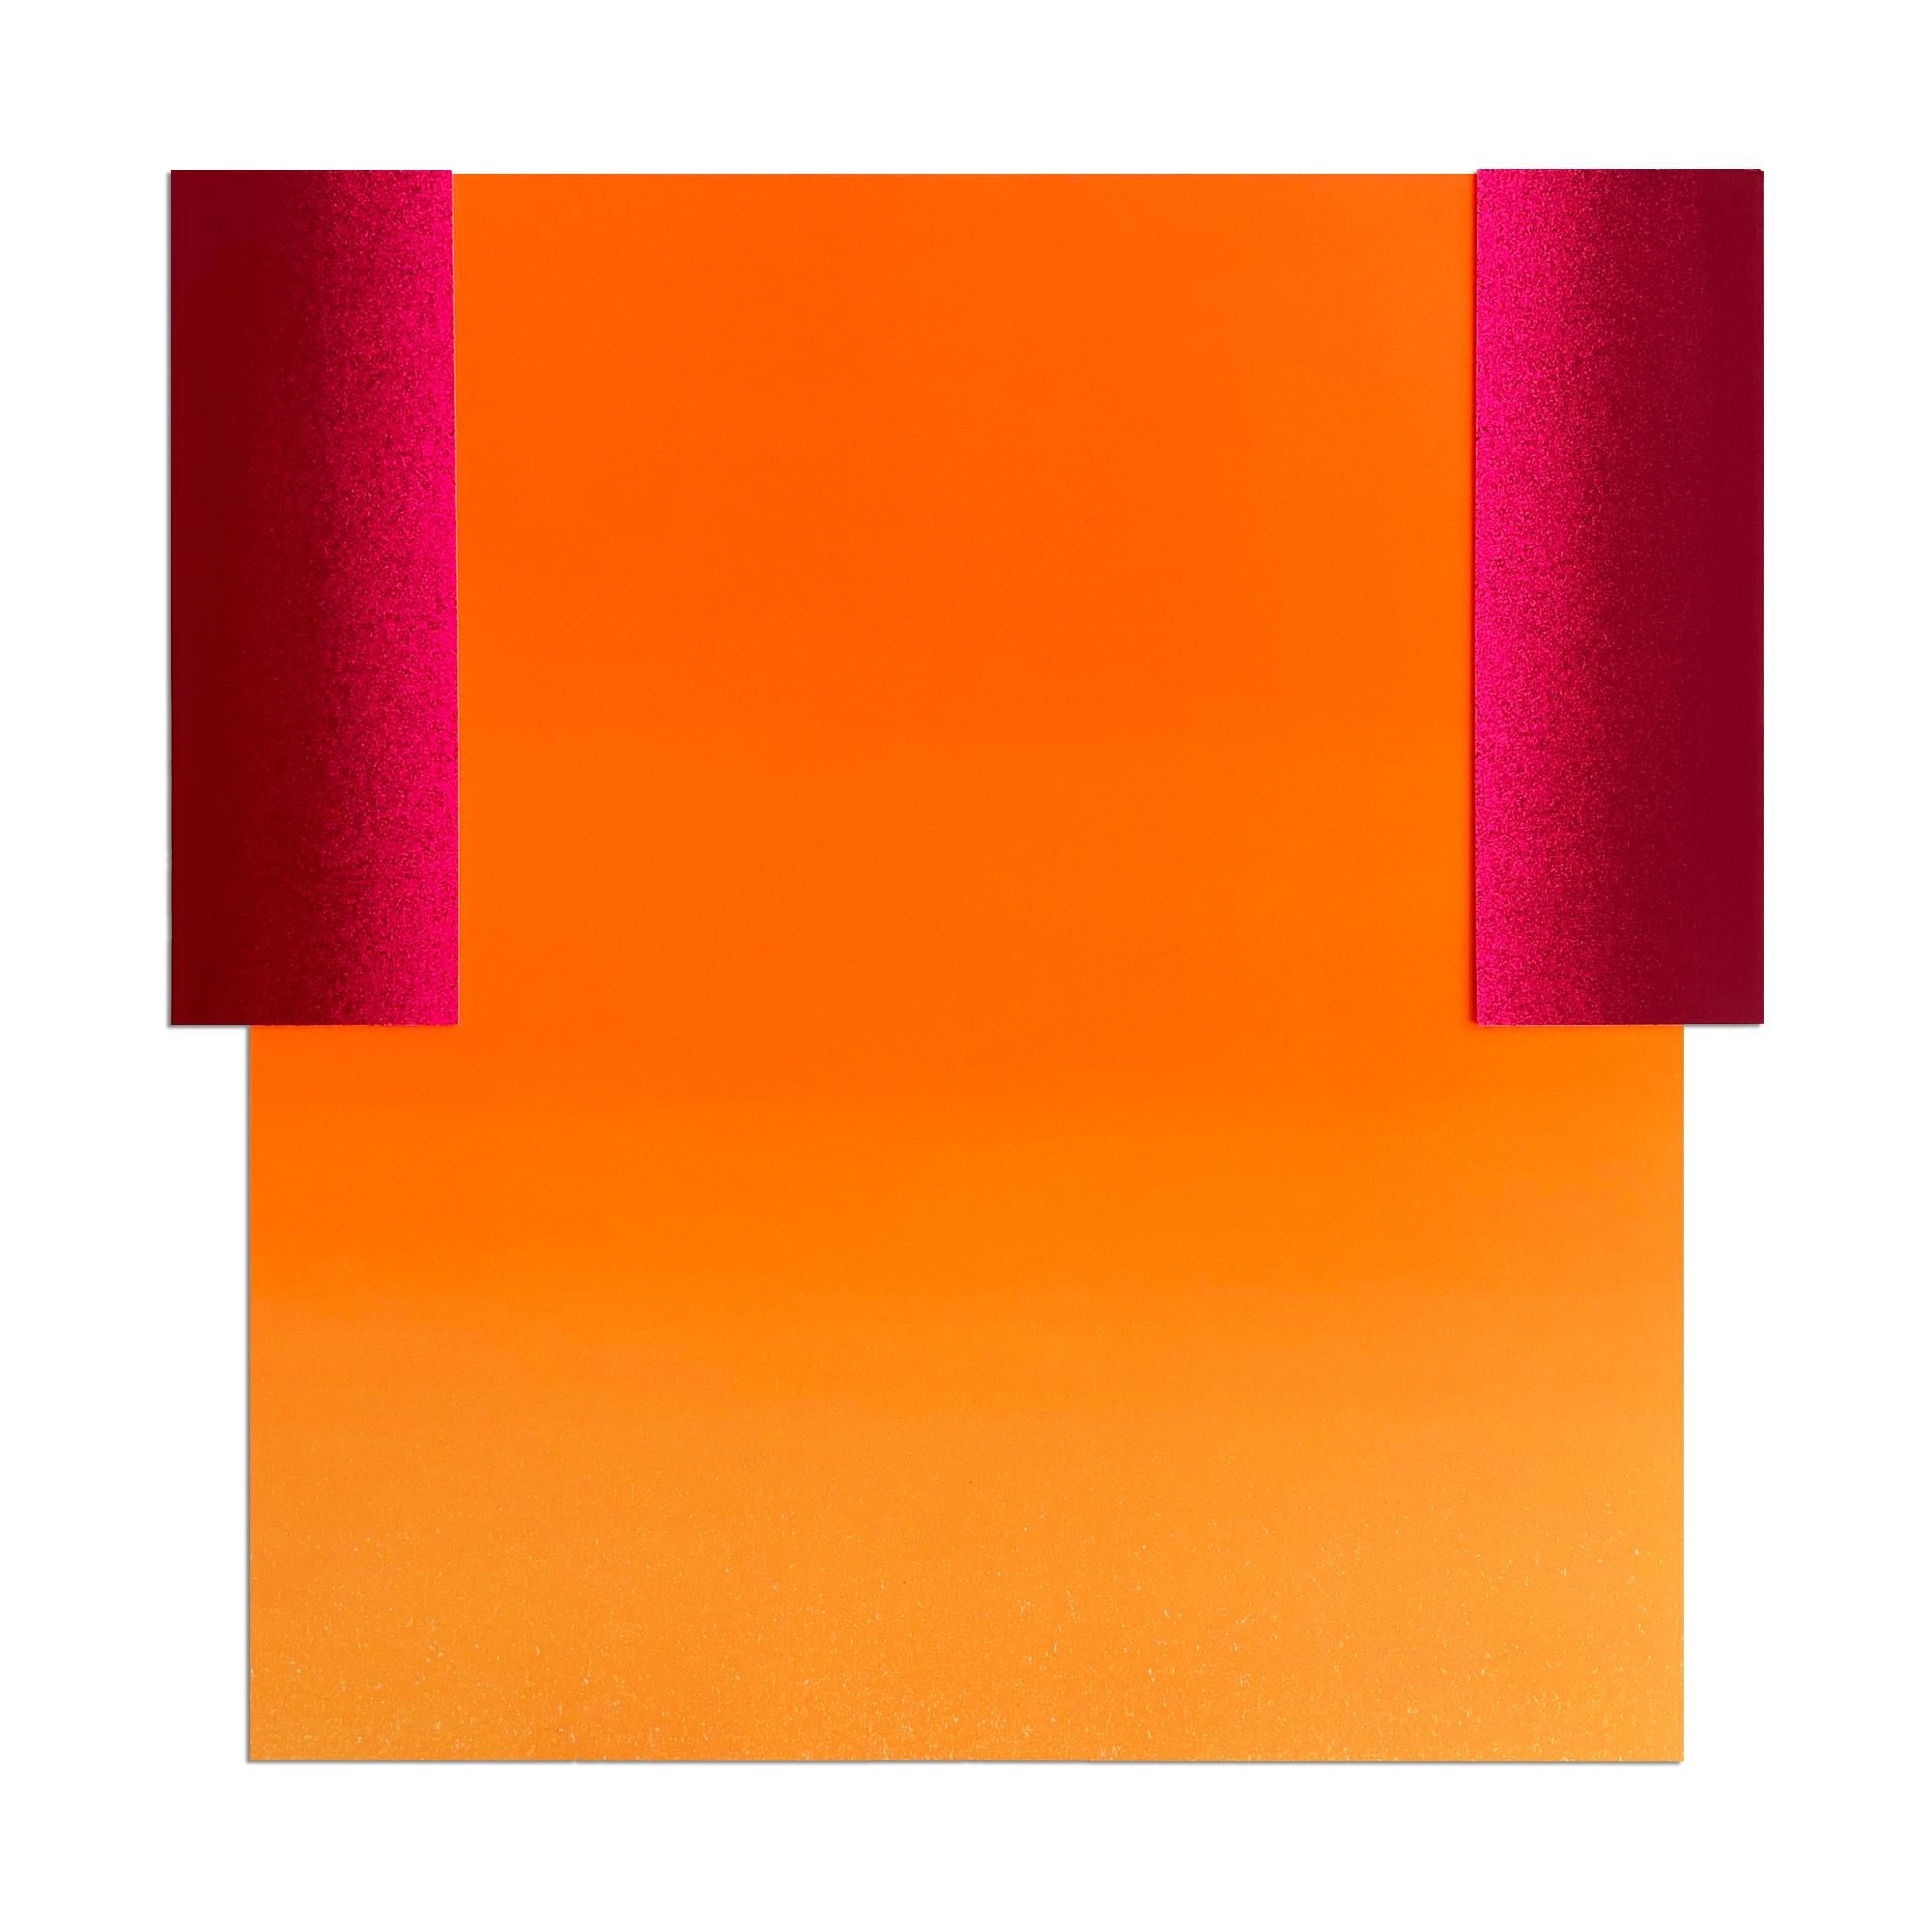 Rupprecht Geiger (German, 1908-2009)
Cold Reds on Orange (No. 5 from All die Roten Farben…), 1981
Medium: Screenprint on cardboard
Dimensions: 39.5 x 40 cm
Edition of 100 + XX: Hand signed in pencil, verso
Publisher: Guido Hildebrandt Verlag,